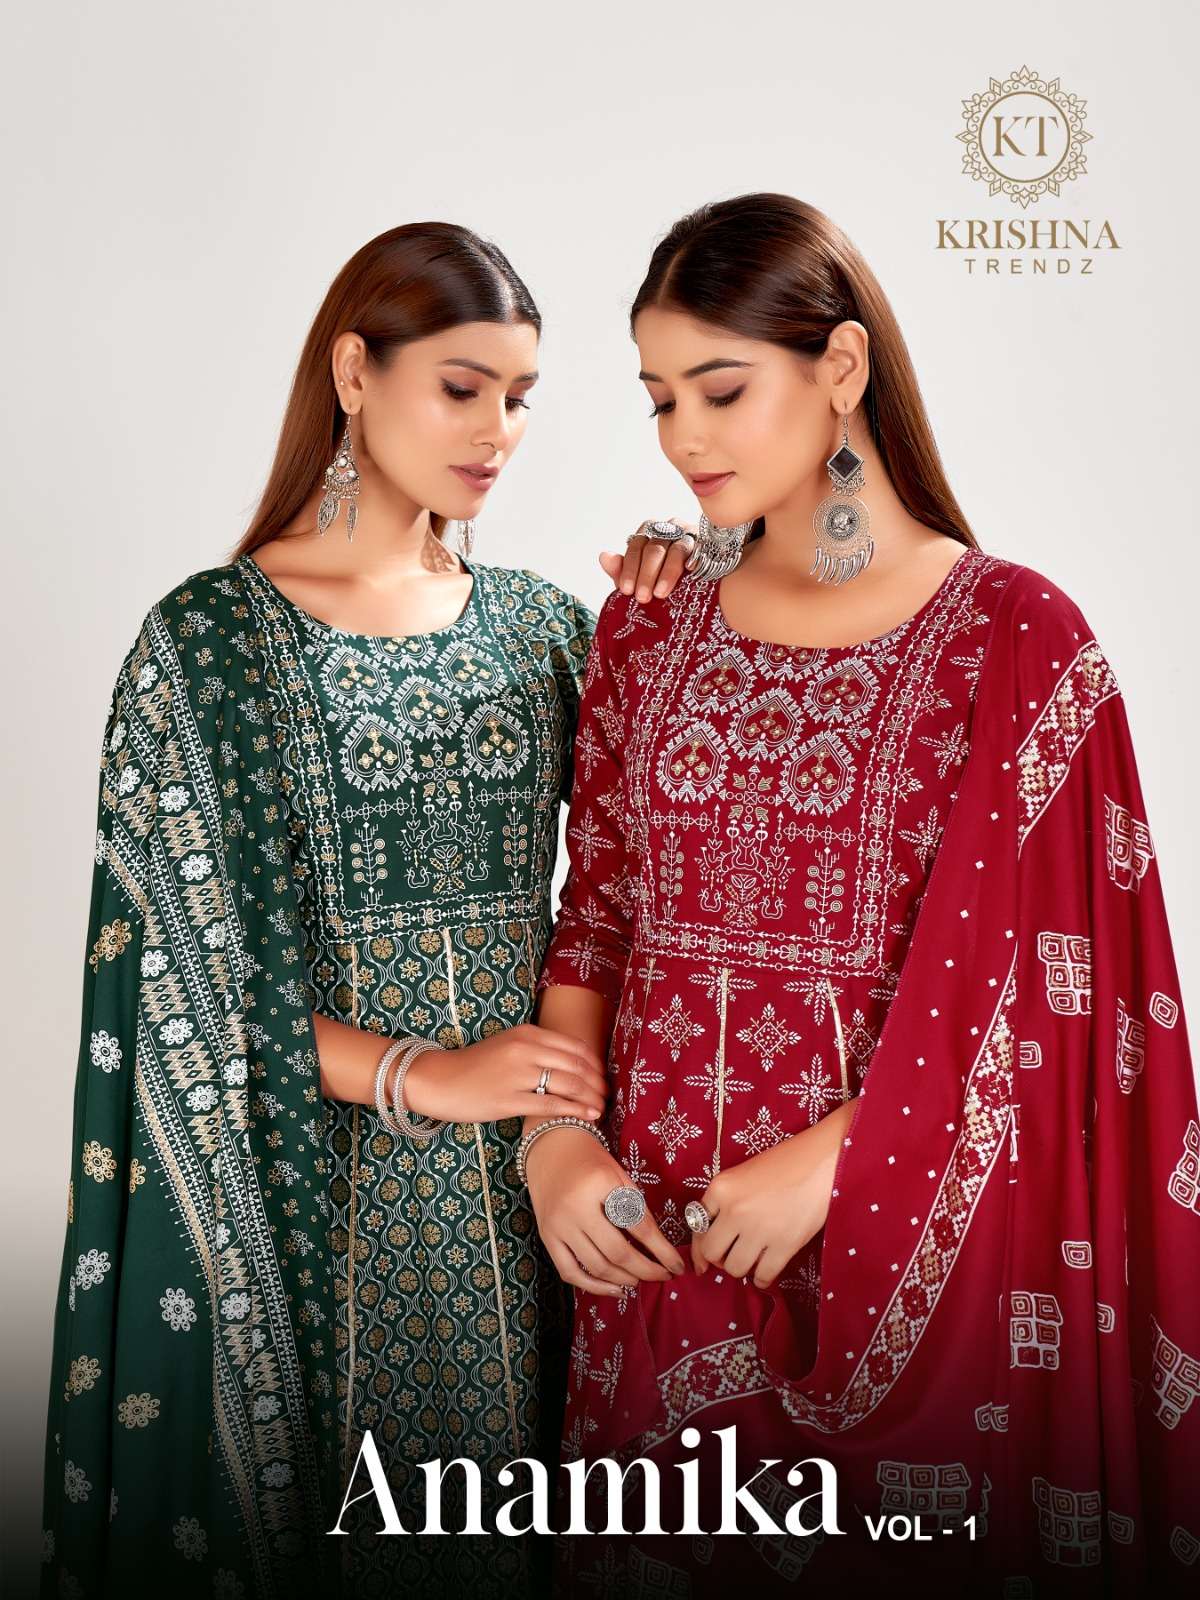 Krishna Trendz Anamika Vol 1 Festive Wear Style Gown Dupatta Set New Designs